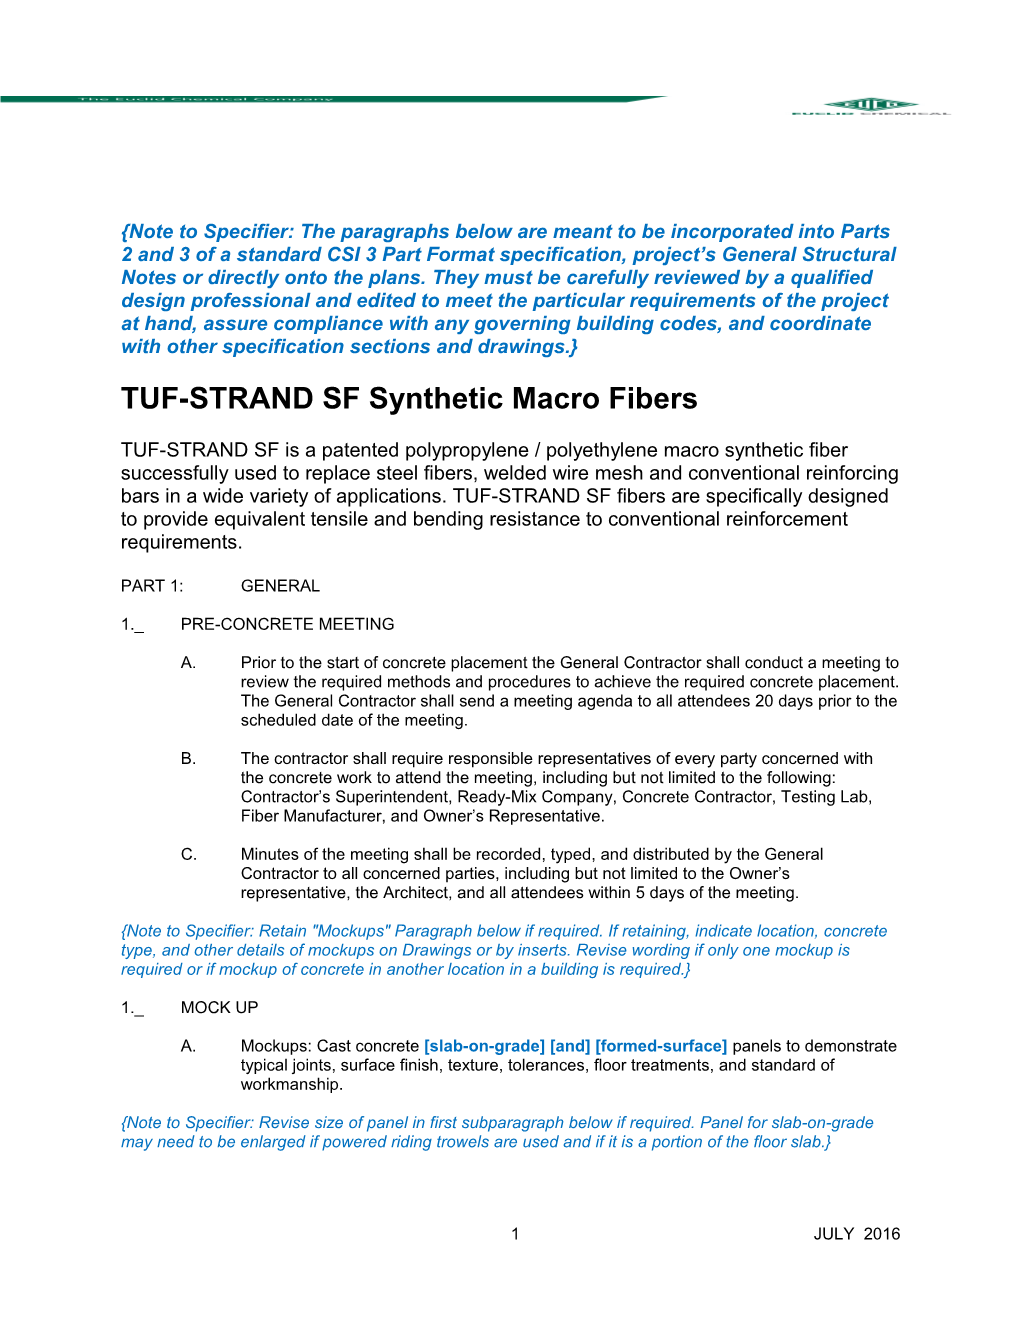 TUF-STRAND Sfsynthetic Macro Fibers